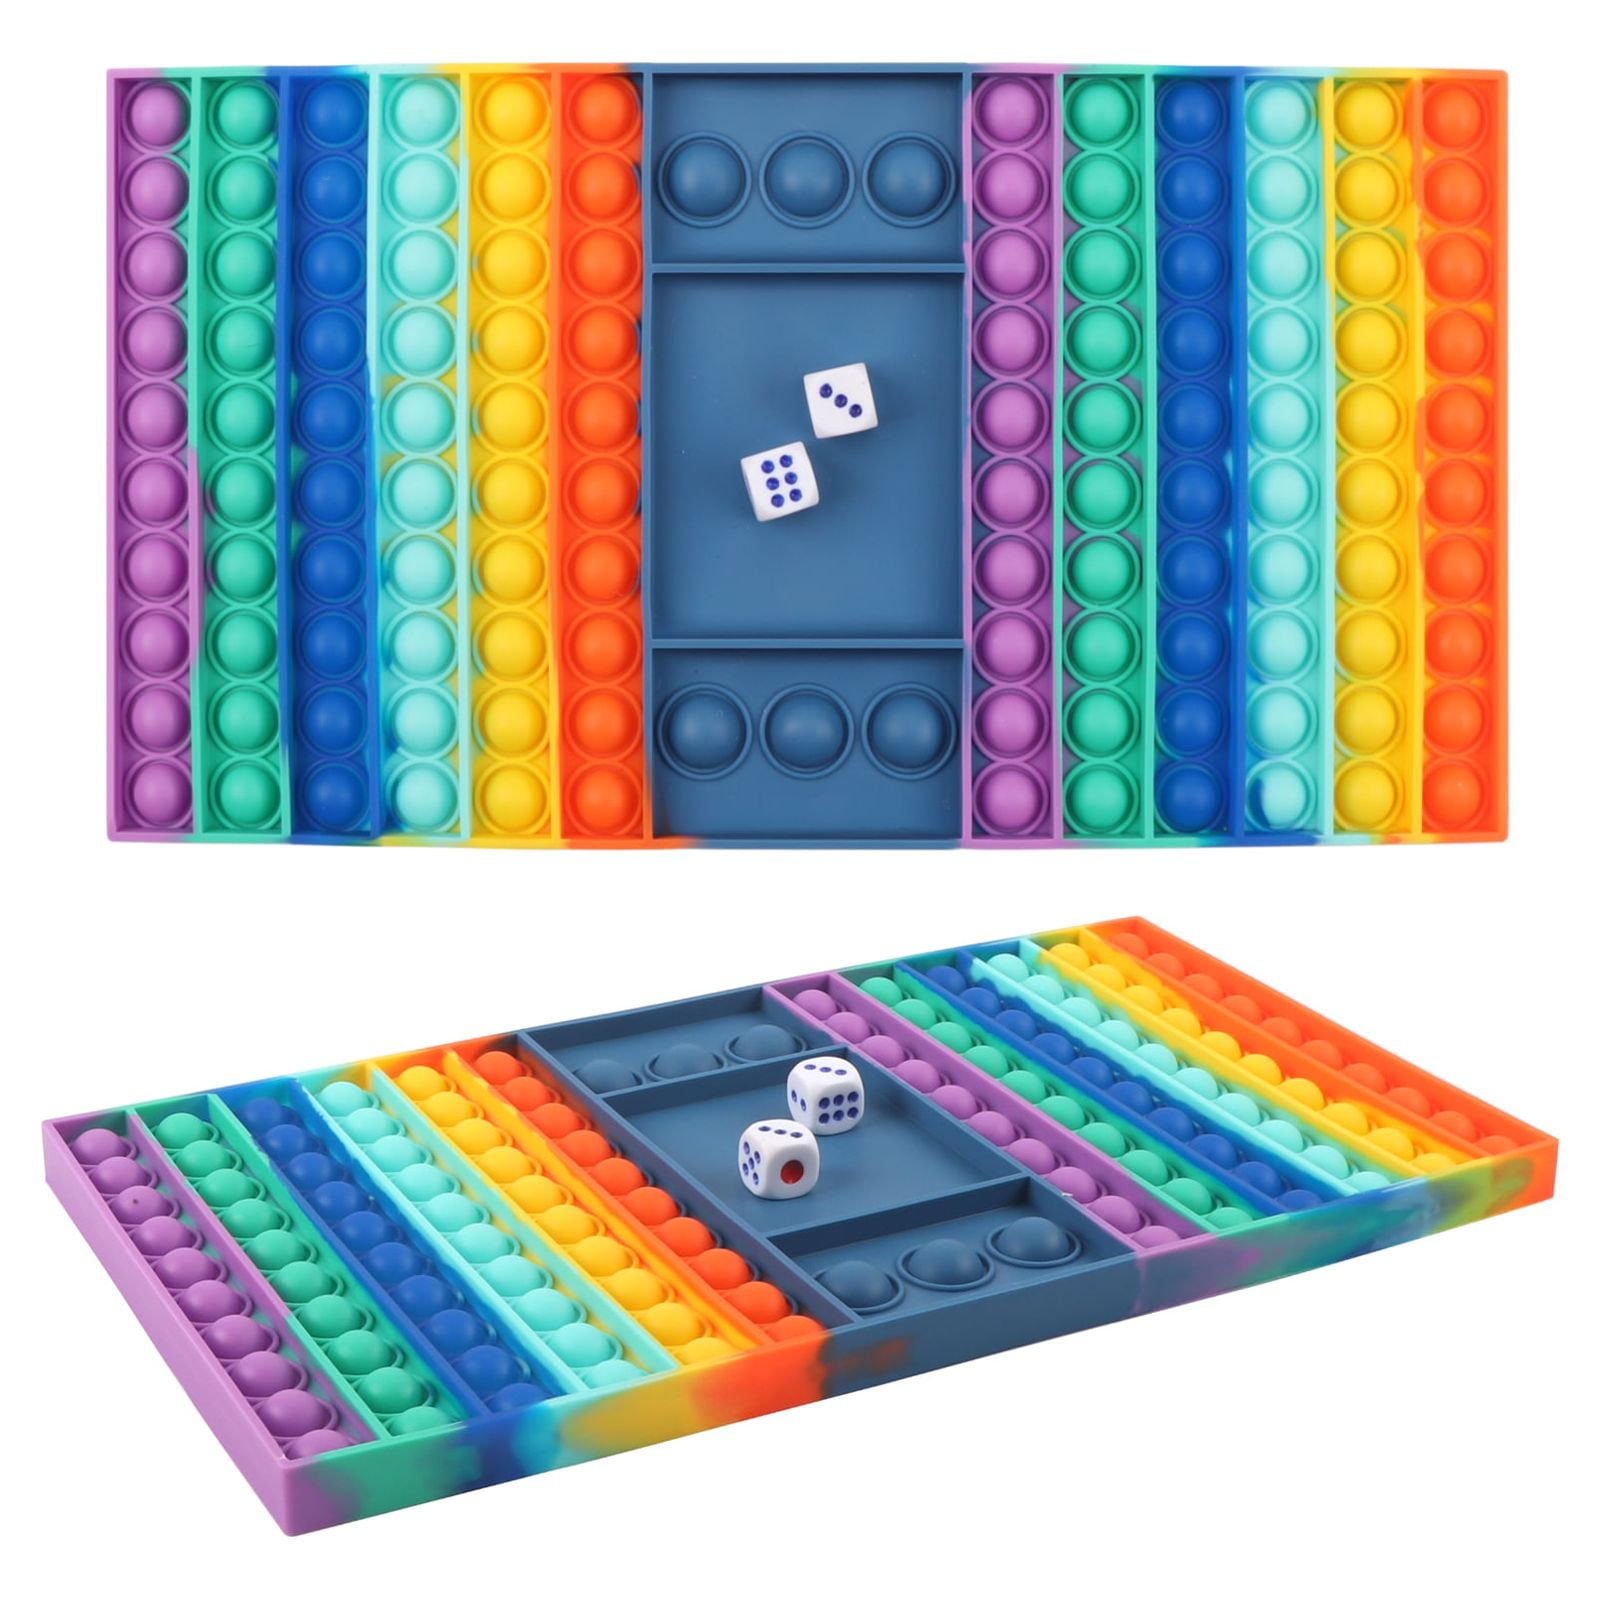  Large Pop It Game Board - Fidget Board Game - Big Popit Rainbow  Chess Board Push Bubble Fidget Toy - Large Bubble Popit Game - Fidget  Sensory Toys for Parent Child 